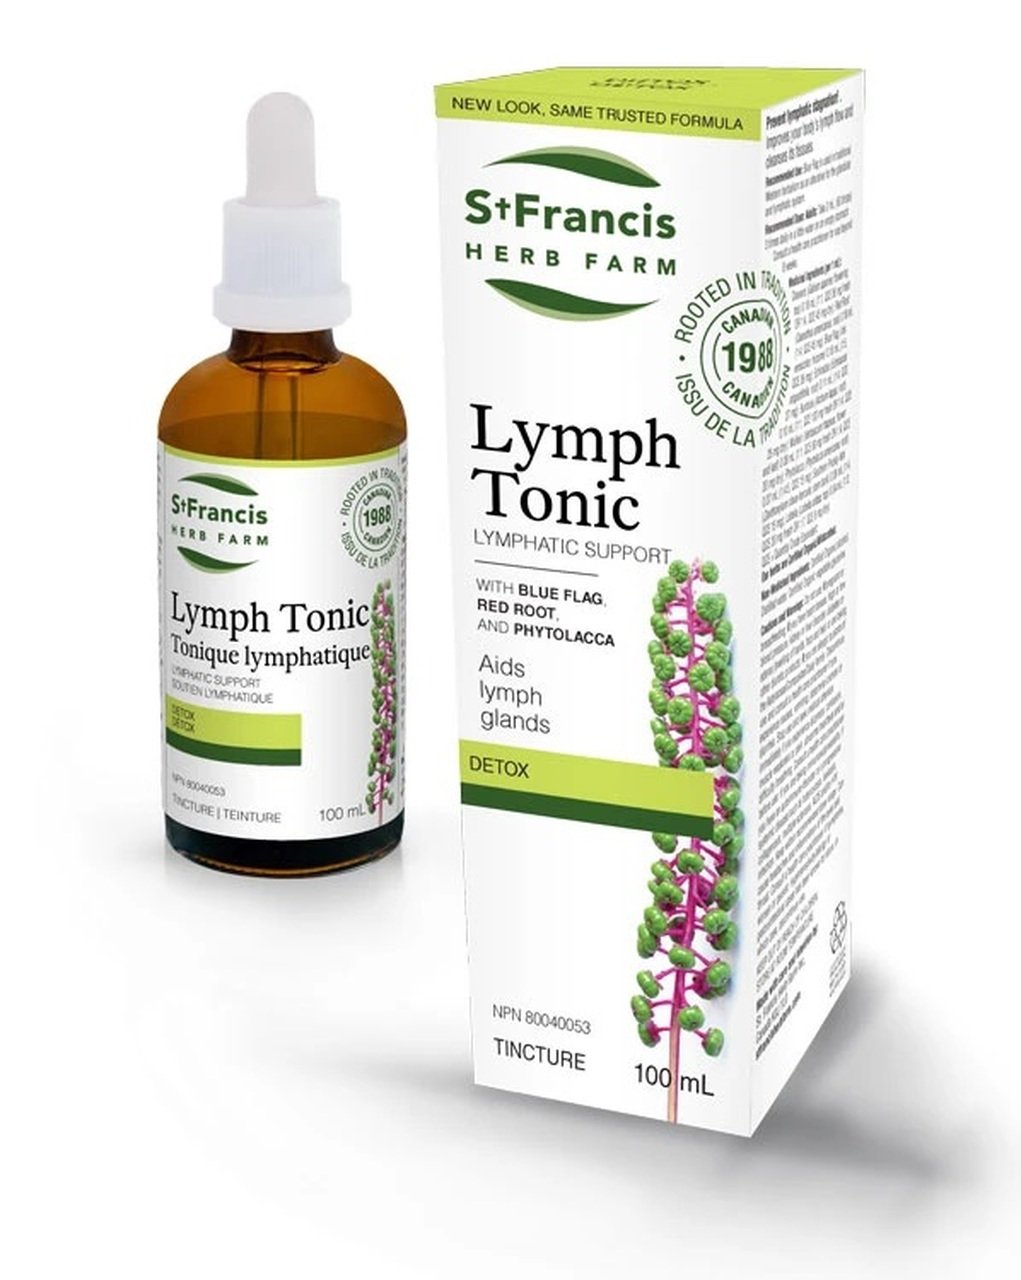 St Francis: Lymph Tonic